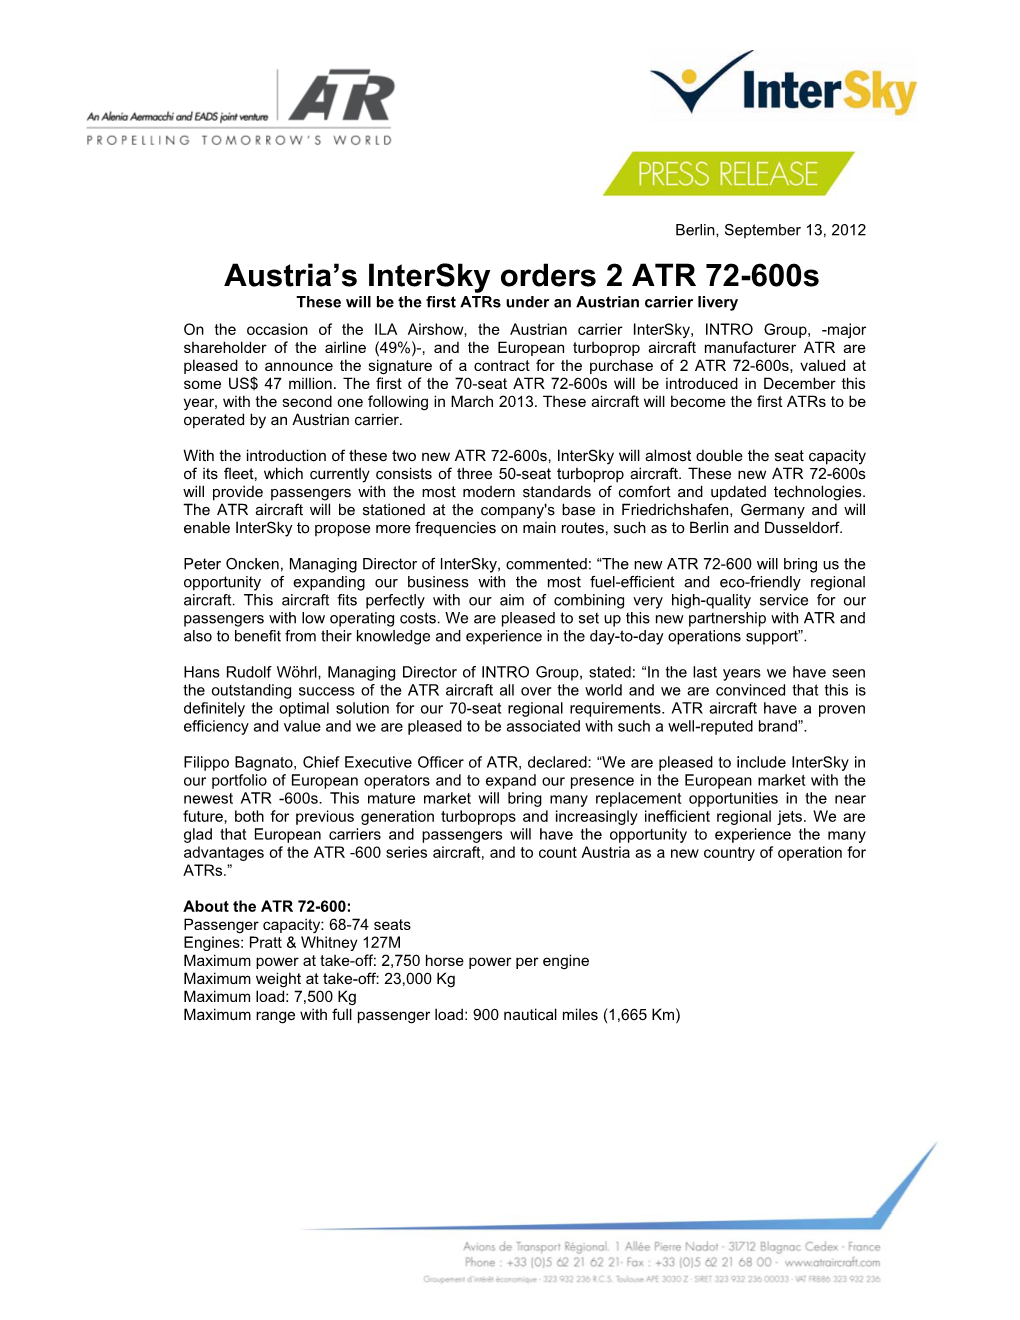 Austria's Intersky Orders 2 ATR 72-600S